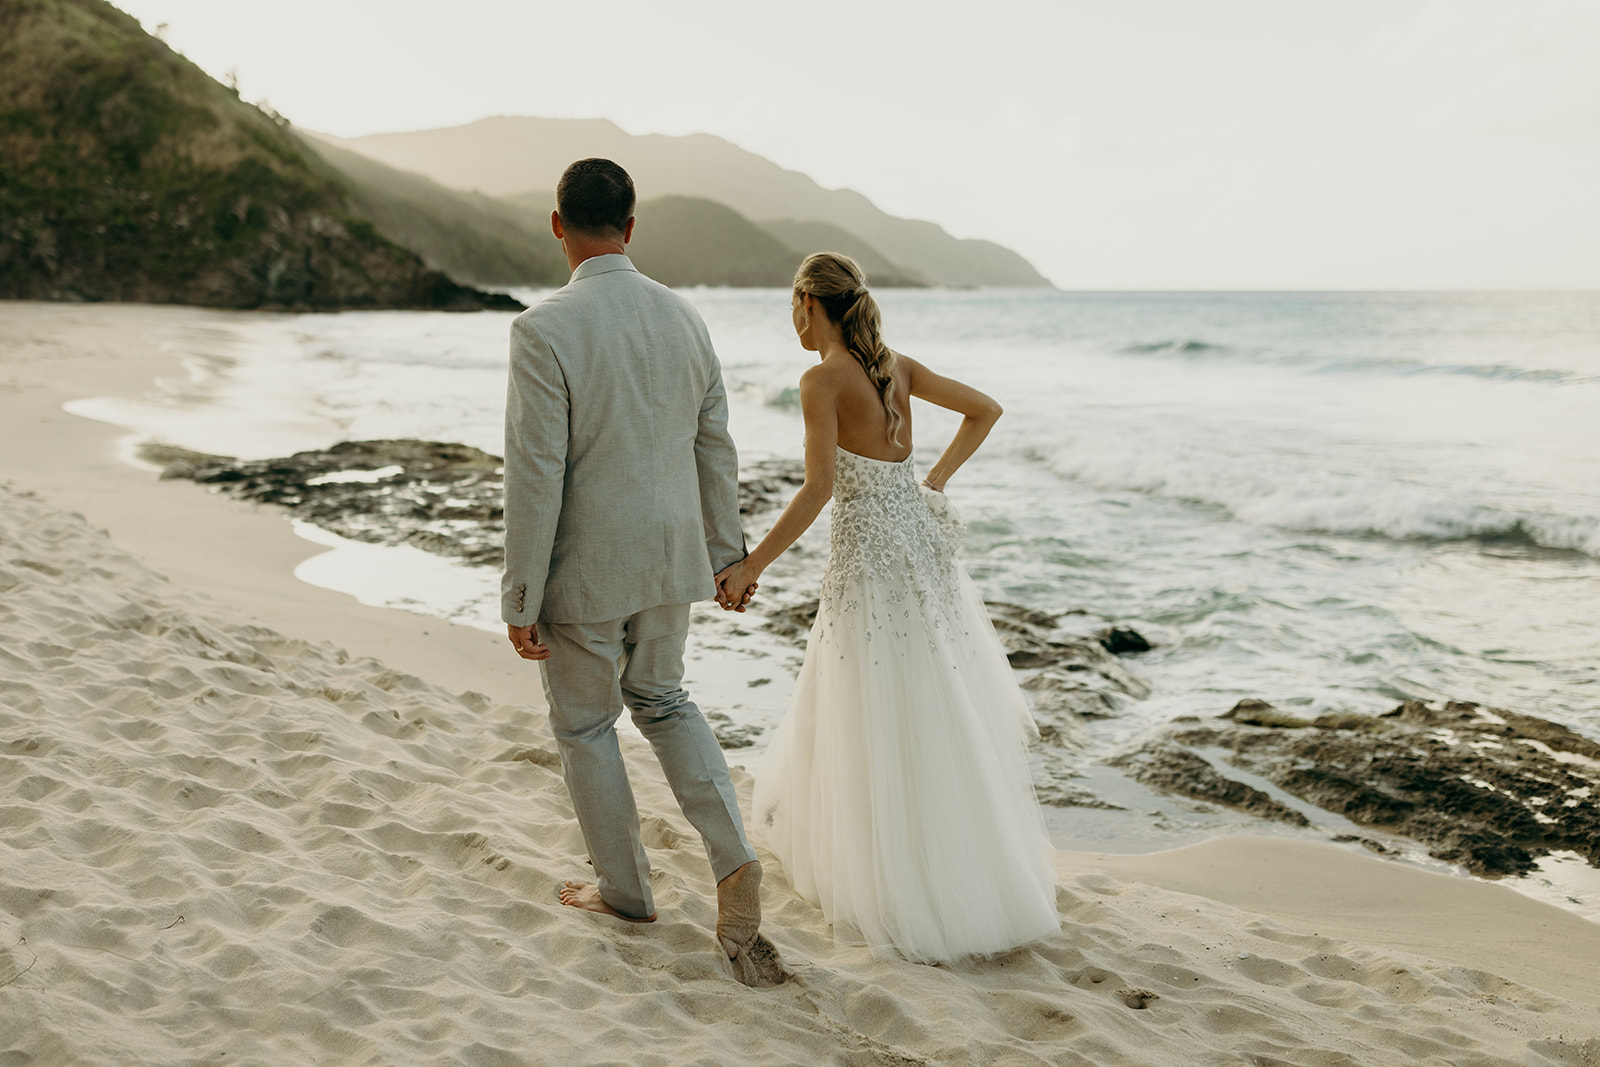 Beautiful beaded wedding dress on the beach